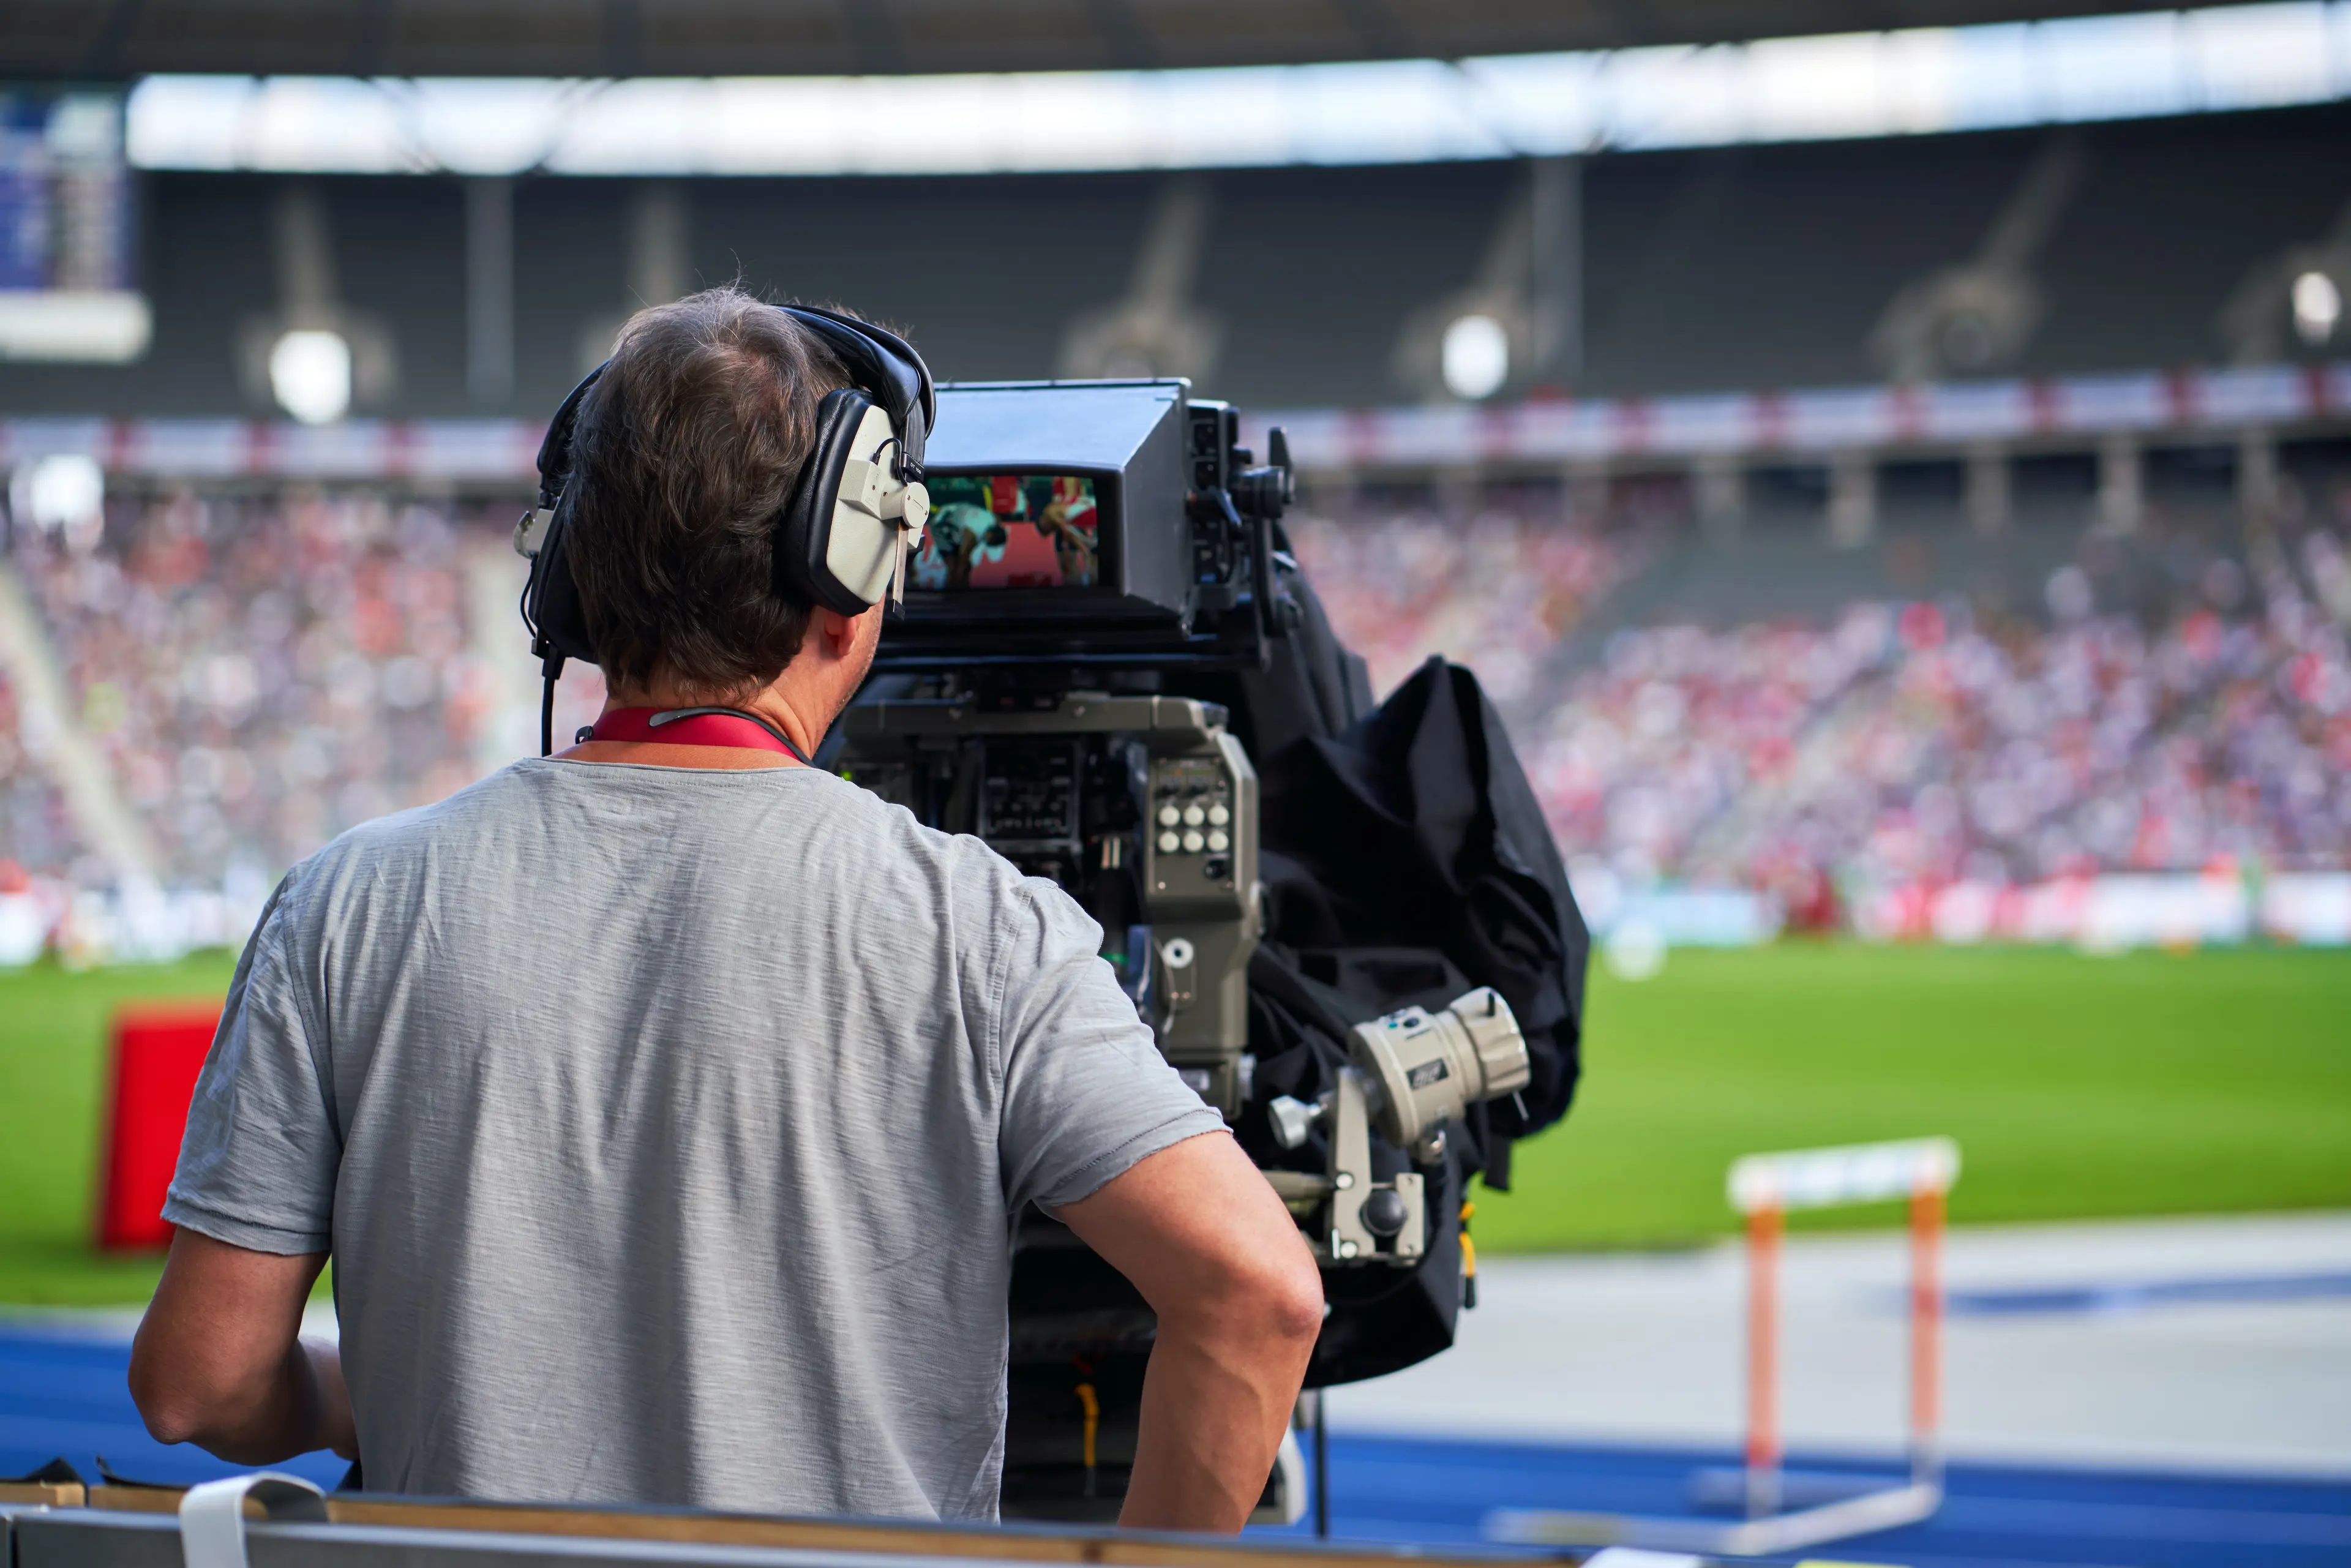 A cameraman filming a sports event